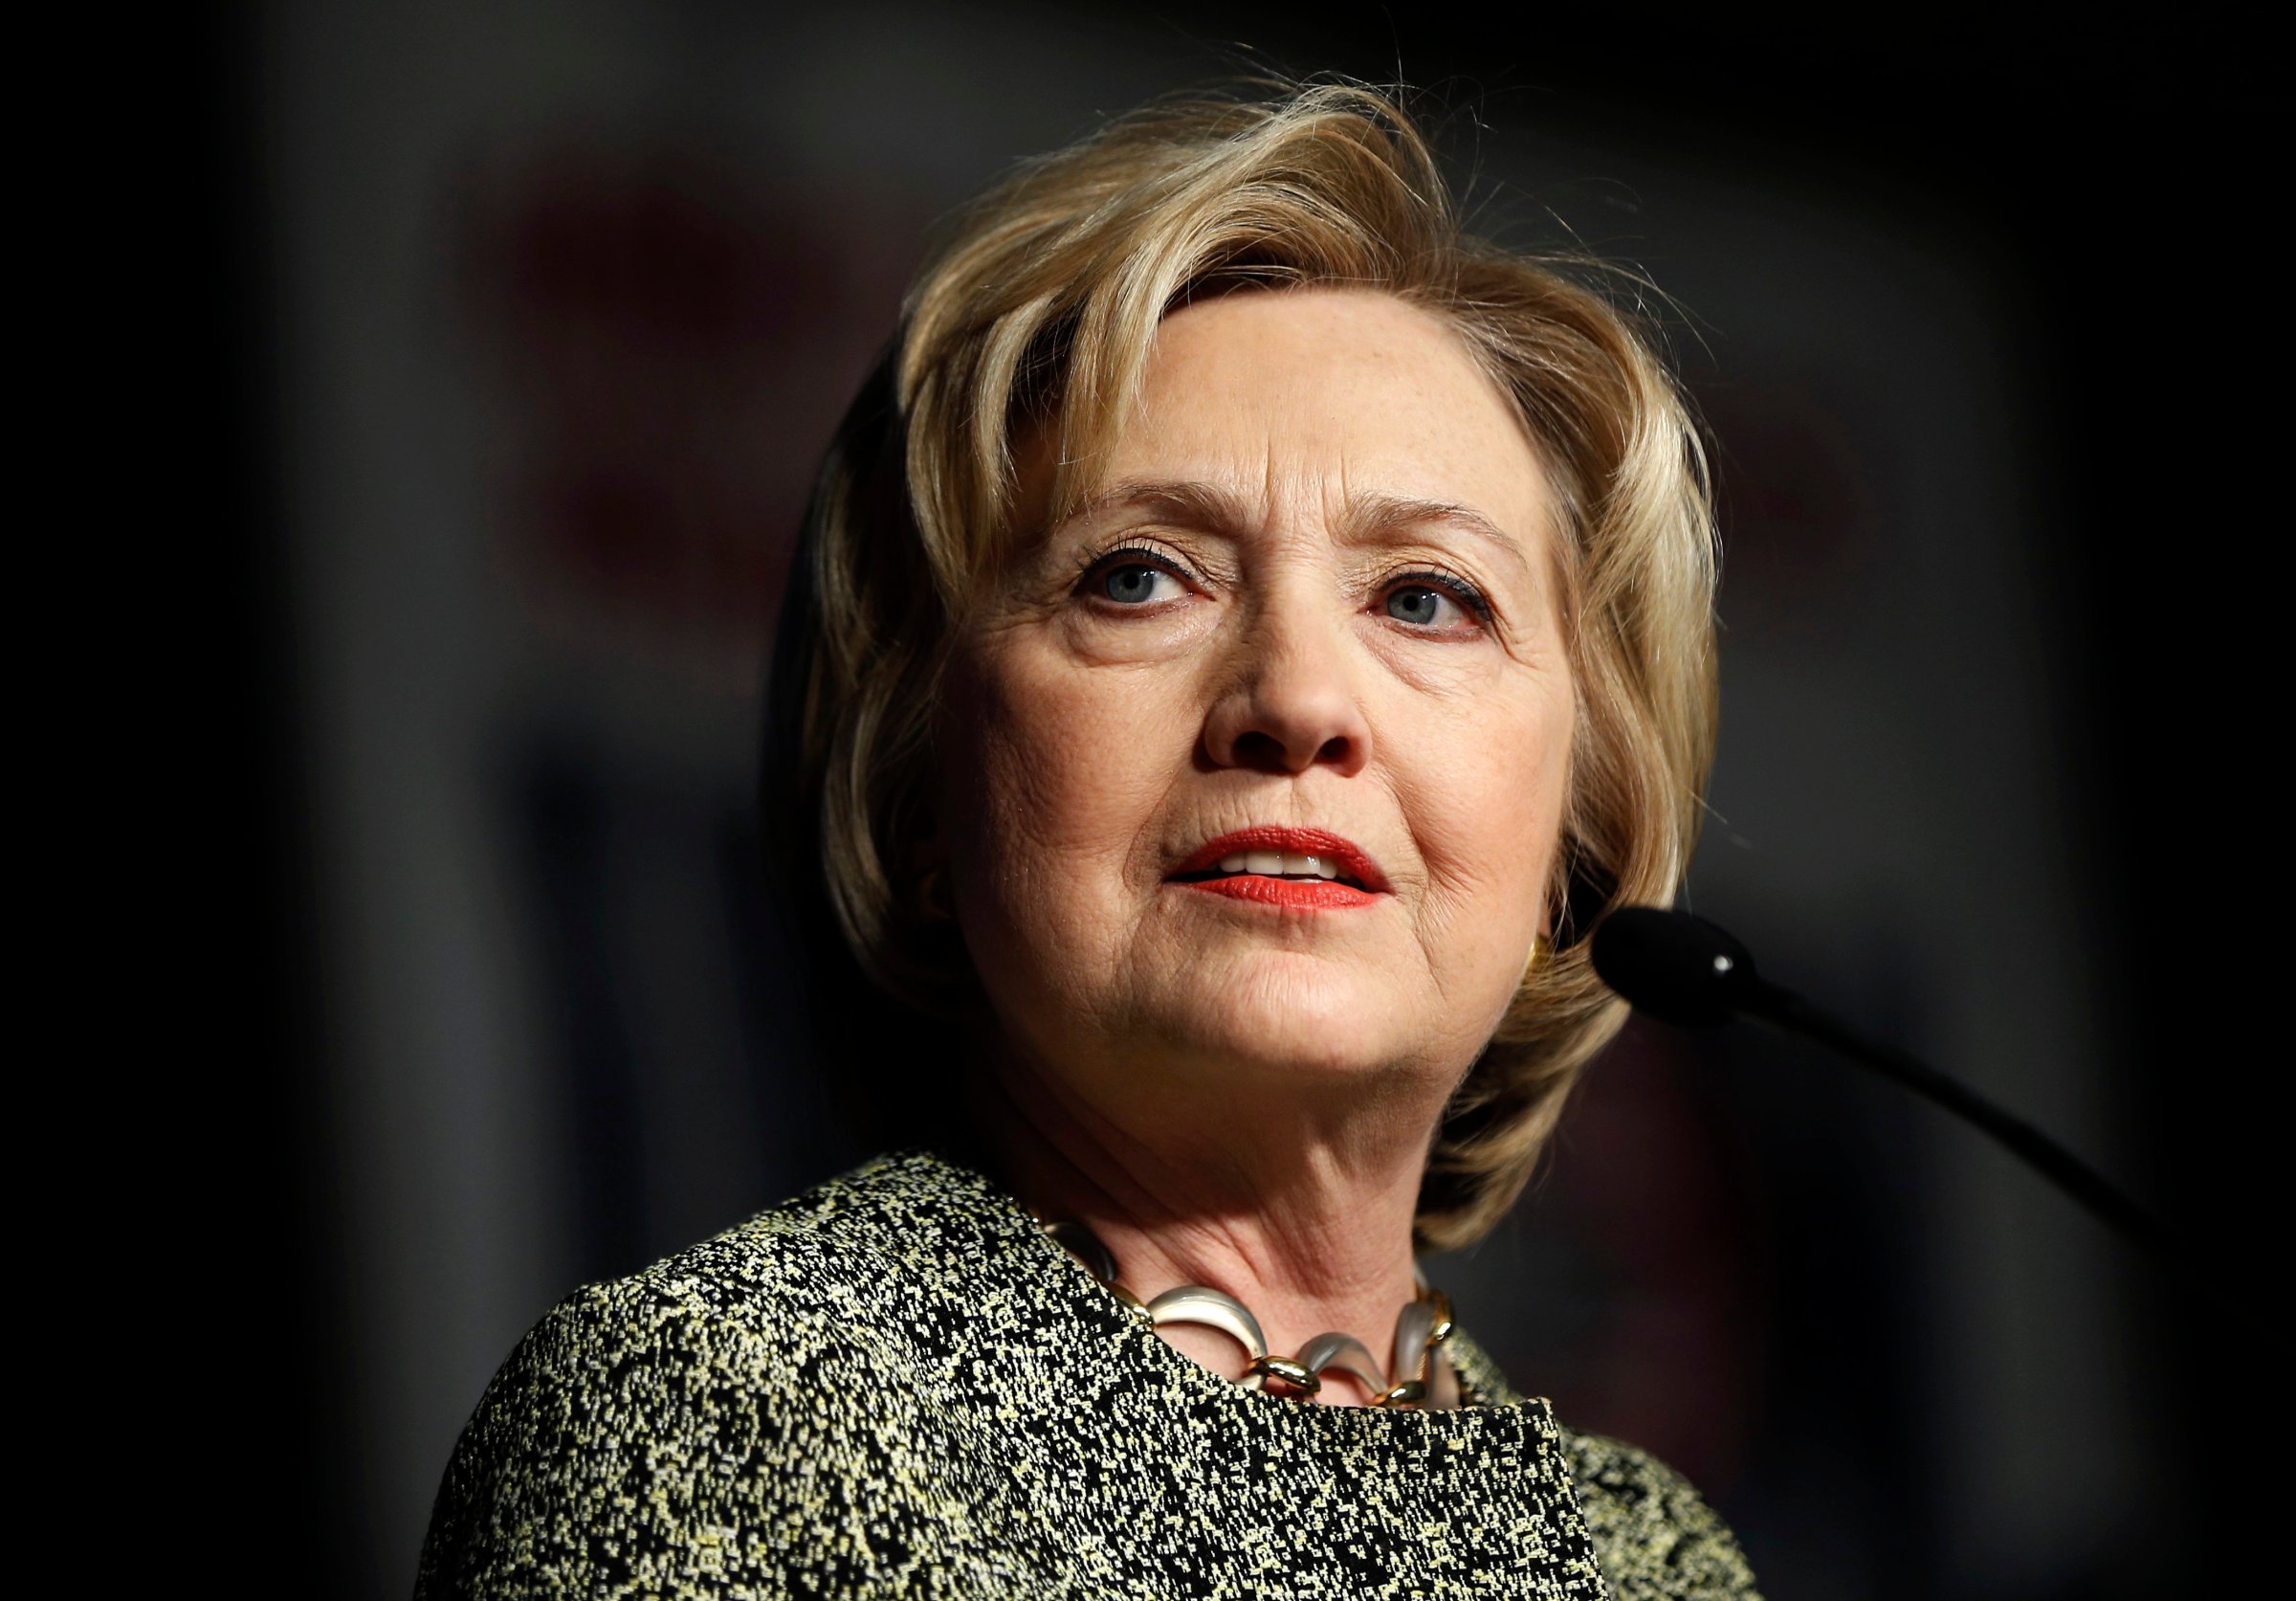 Hillary Clinton speaks at the Pennsylvania AFL-CIO Convention in Philadelphia on April 6, 2016.